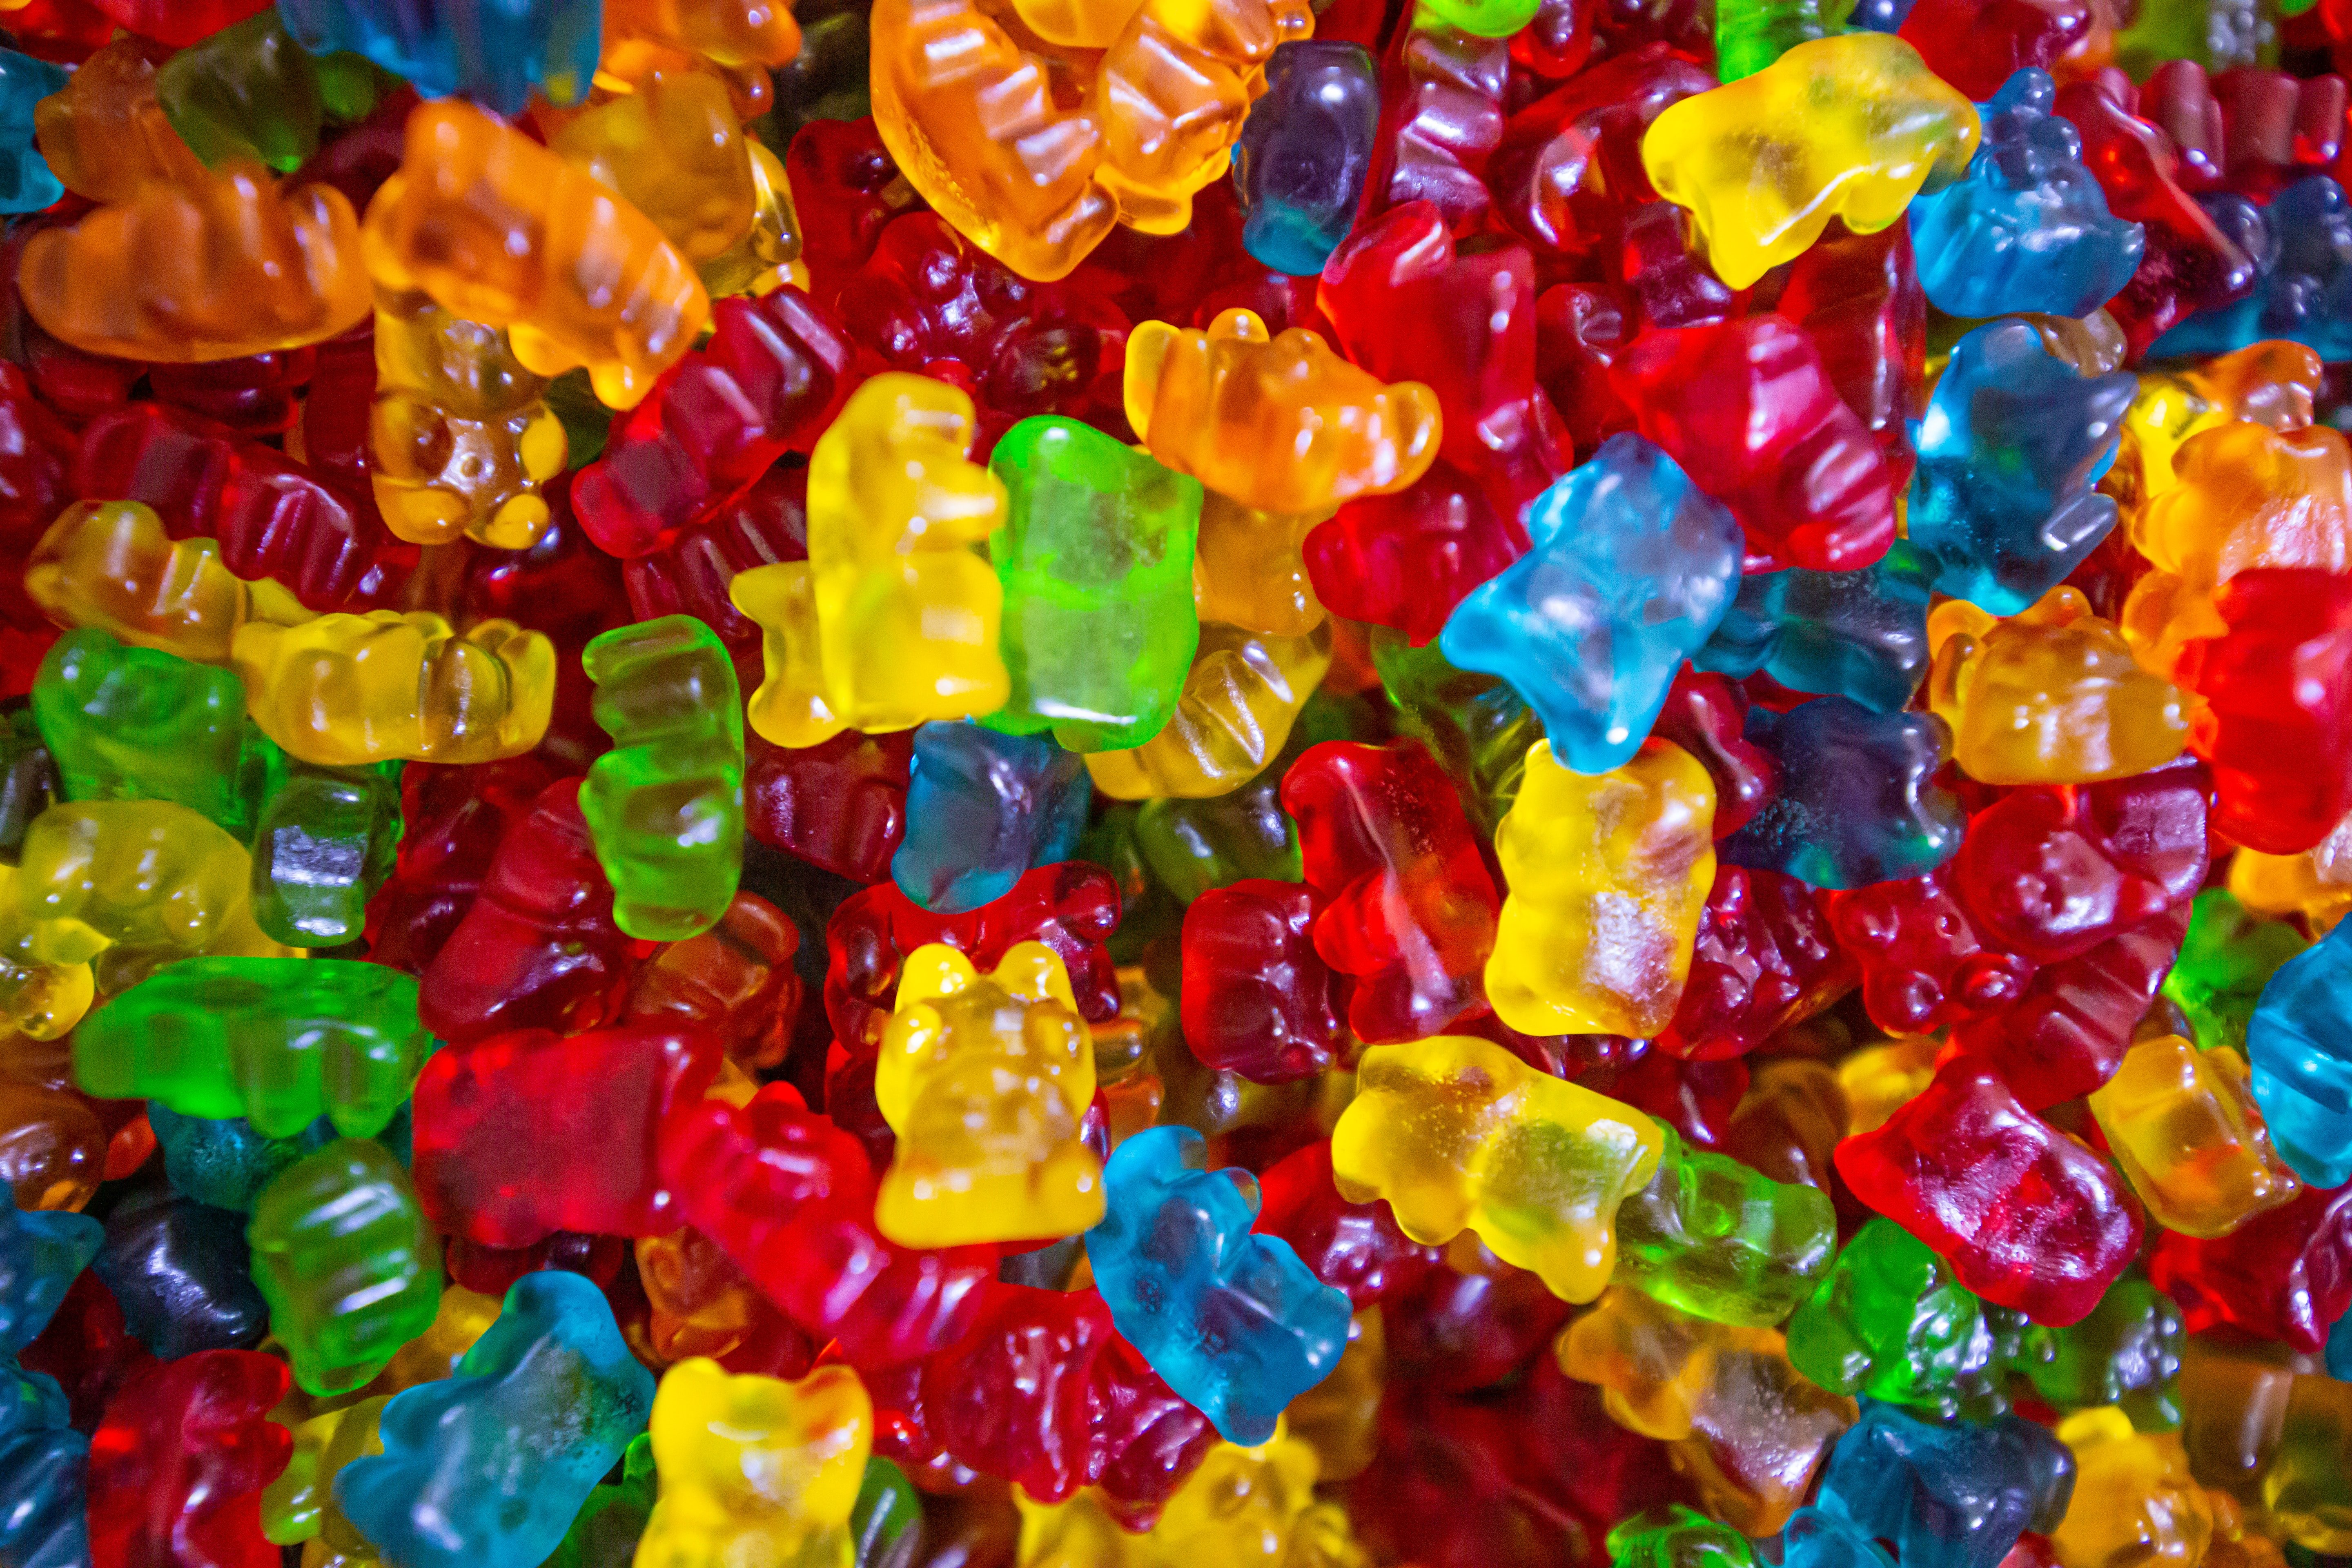 cartoon gummy bear - Google Search